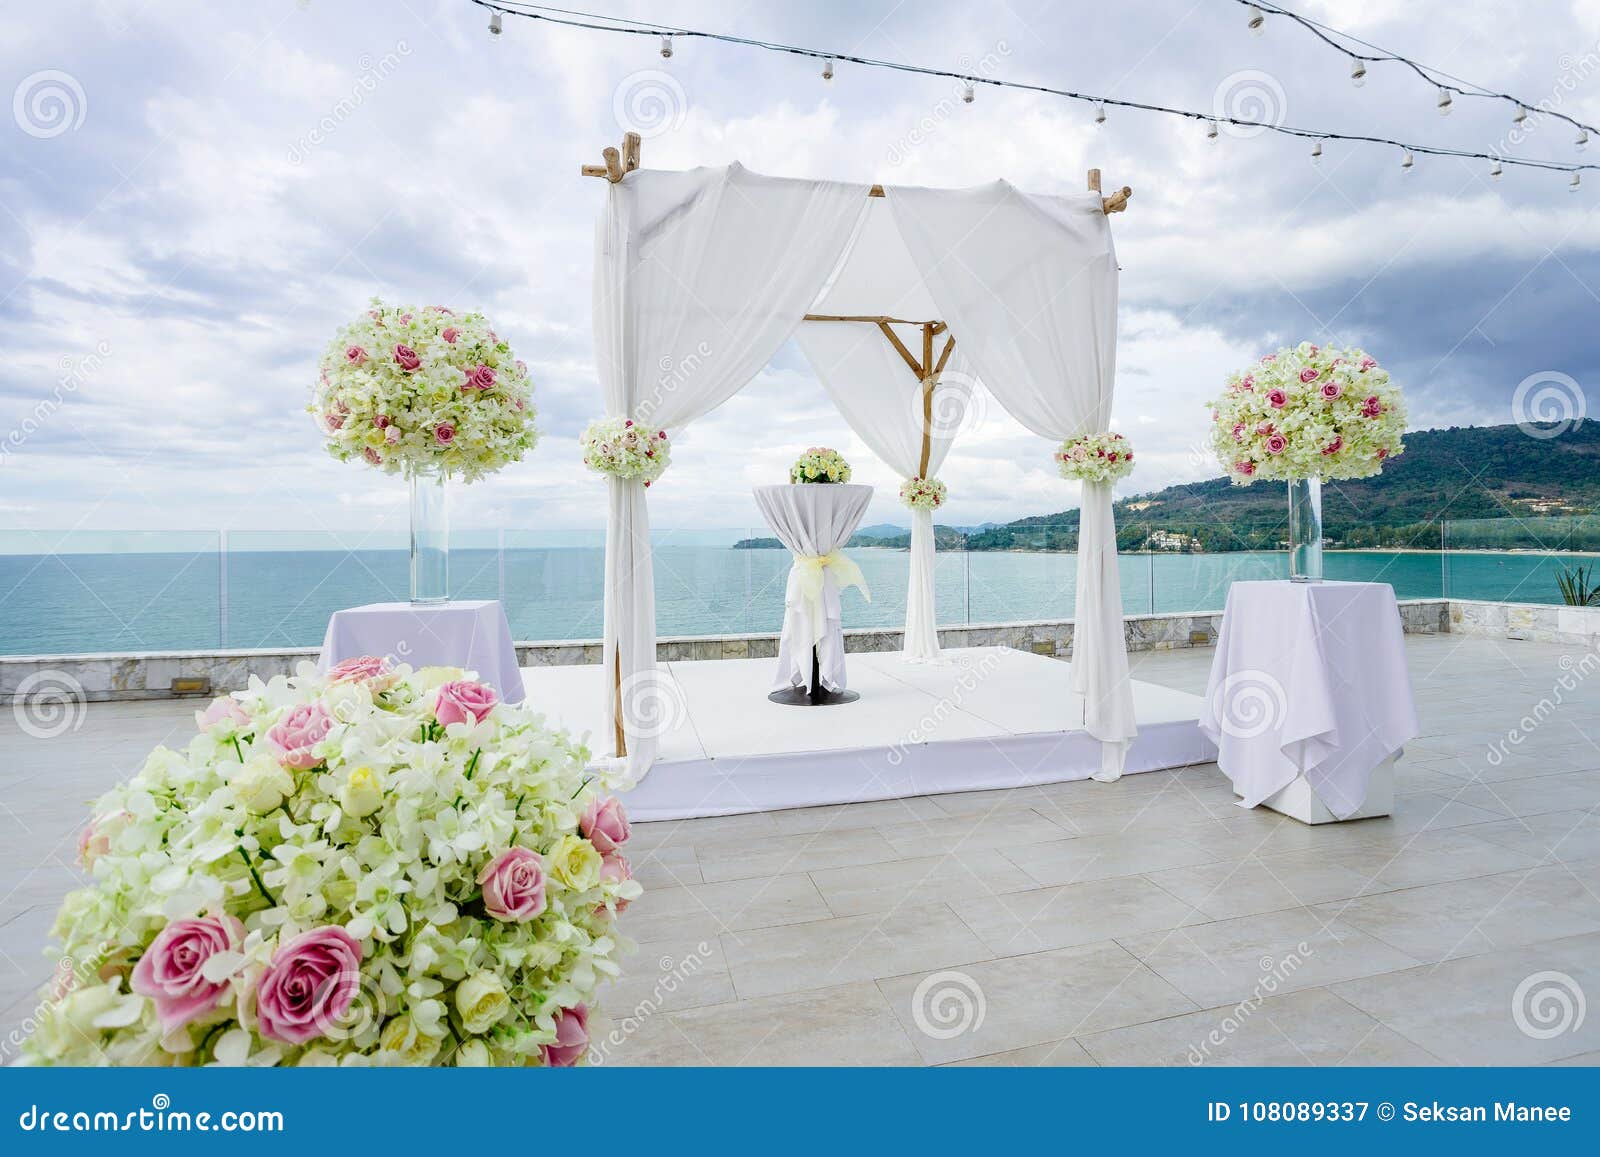 Beach Wedding Venue Samui Thailand Stock Image Image Of Blue